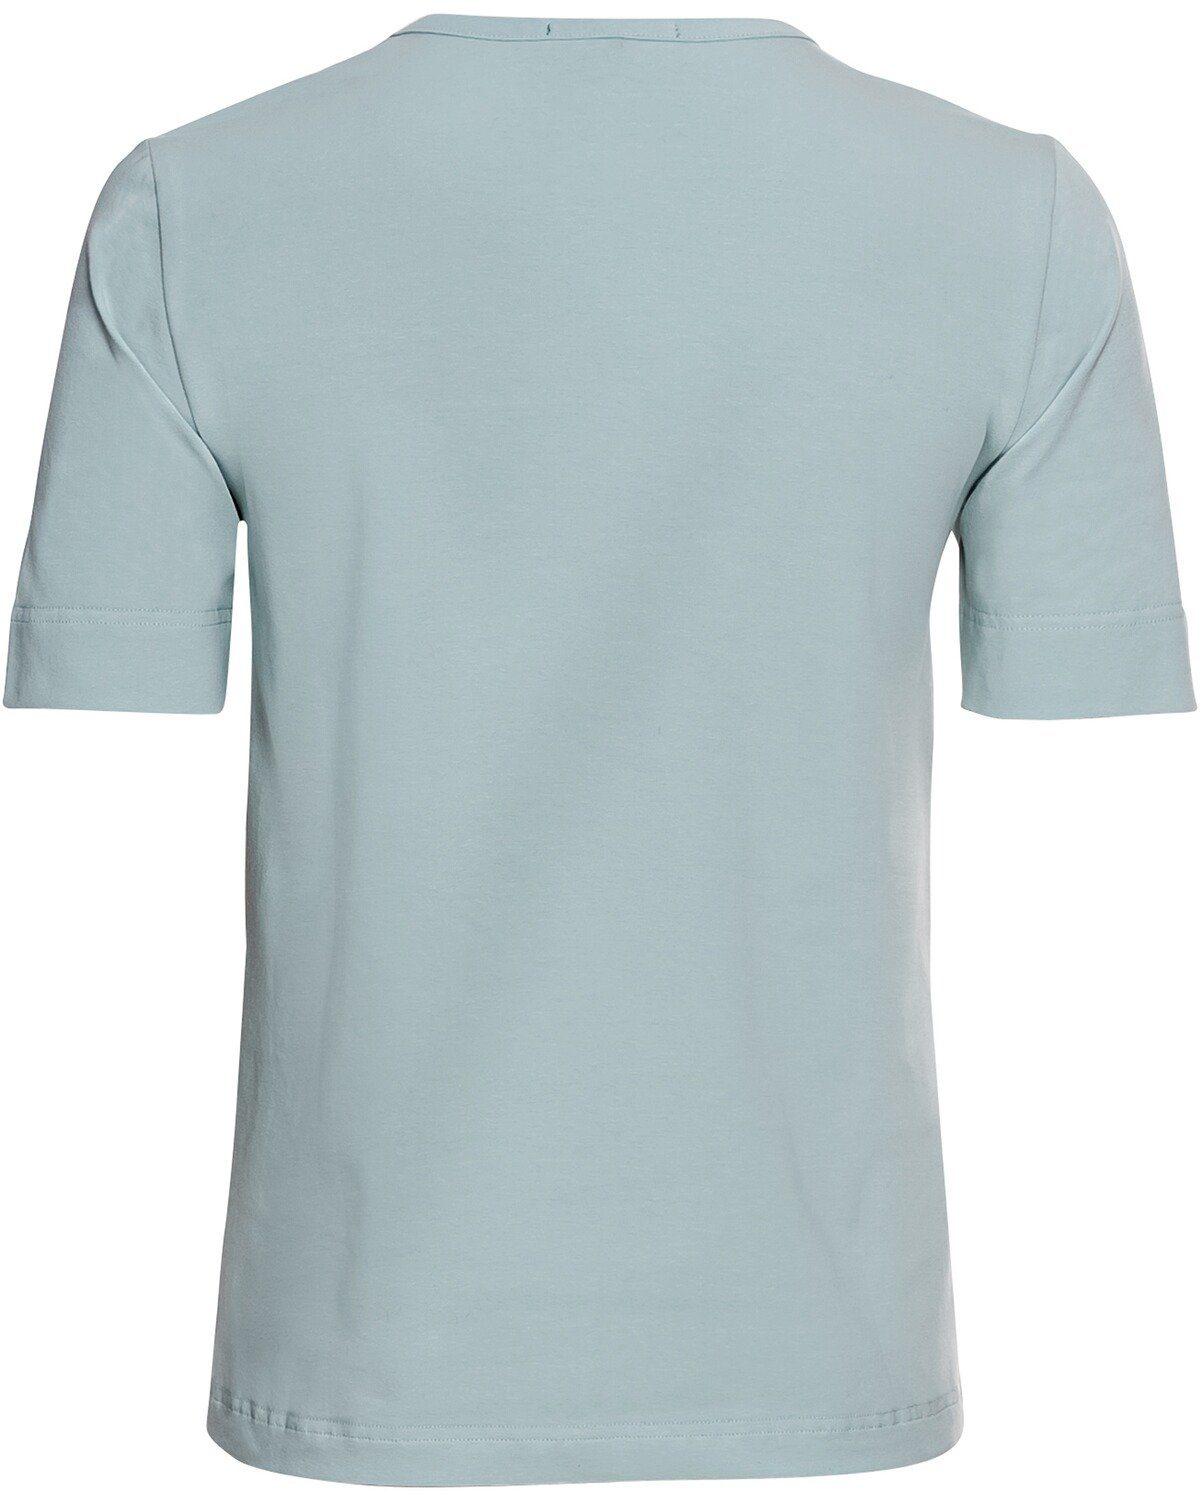 Highmoor T-Shirt T-Shirt mit Bleu Rundhals